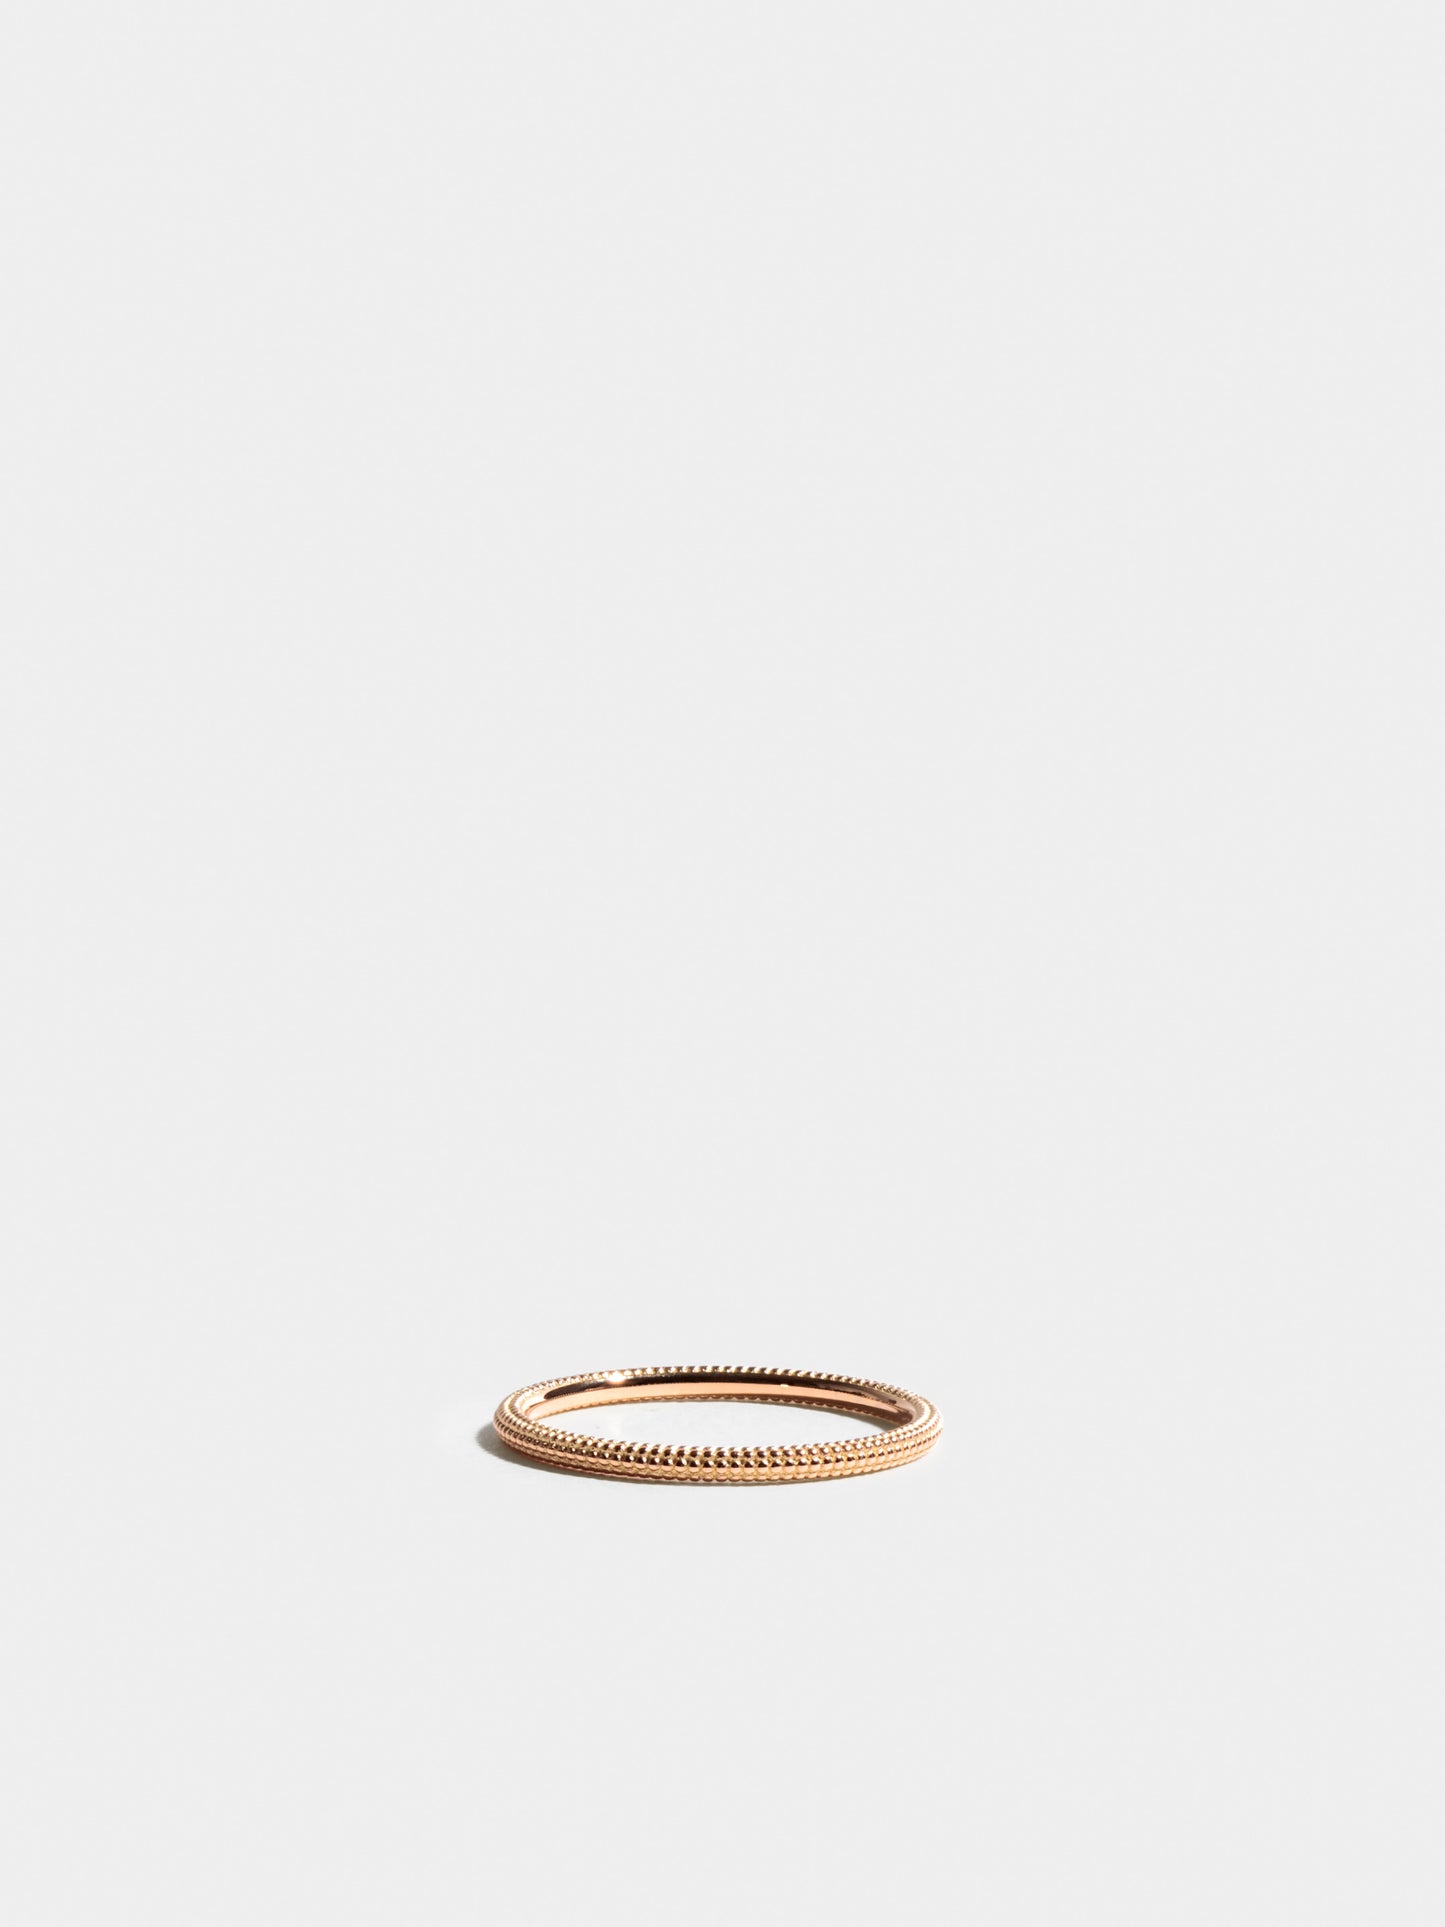 Fair trade Ring: Anagramme “millegrains” Ring aus Roségold, liegend